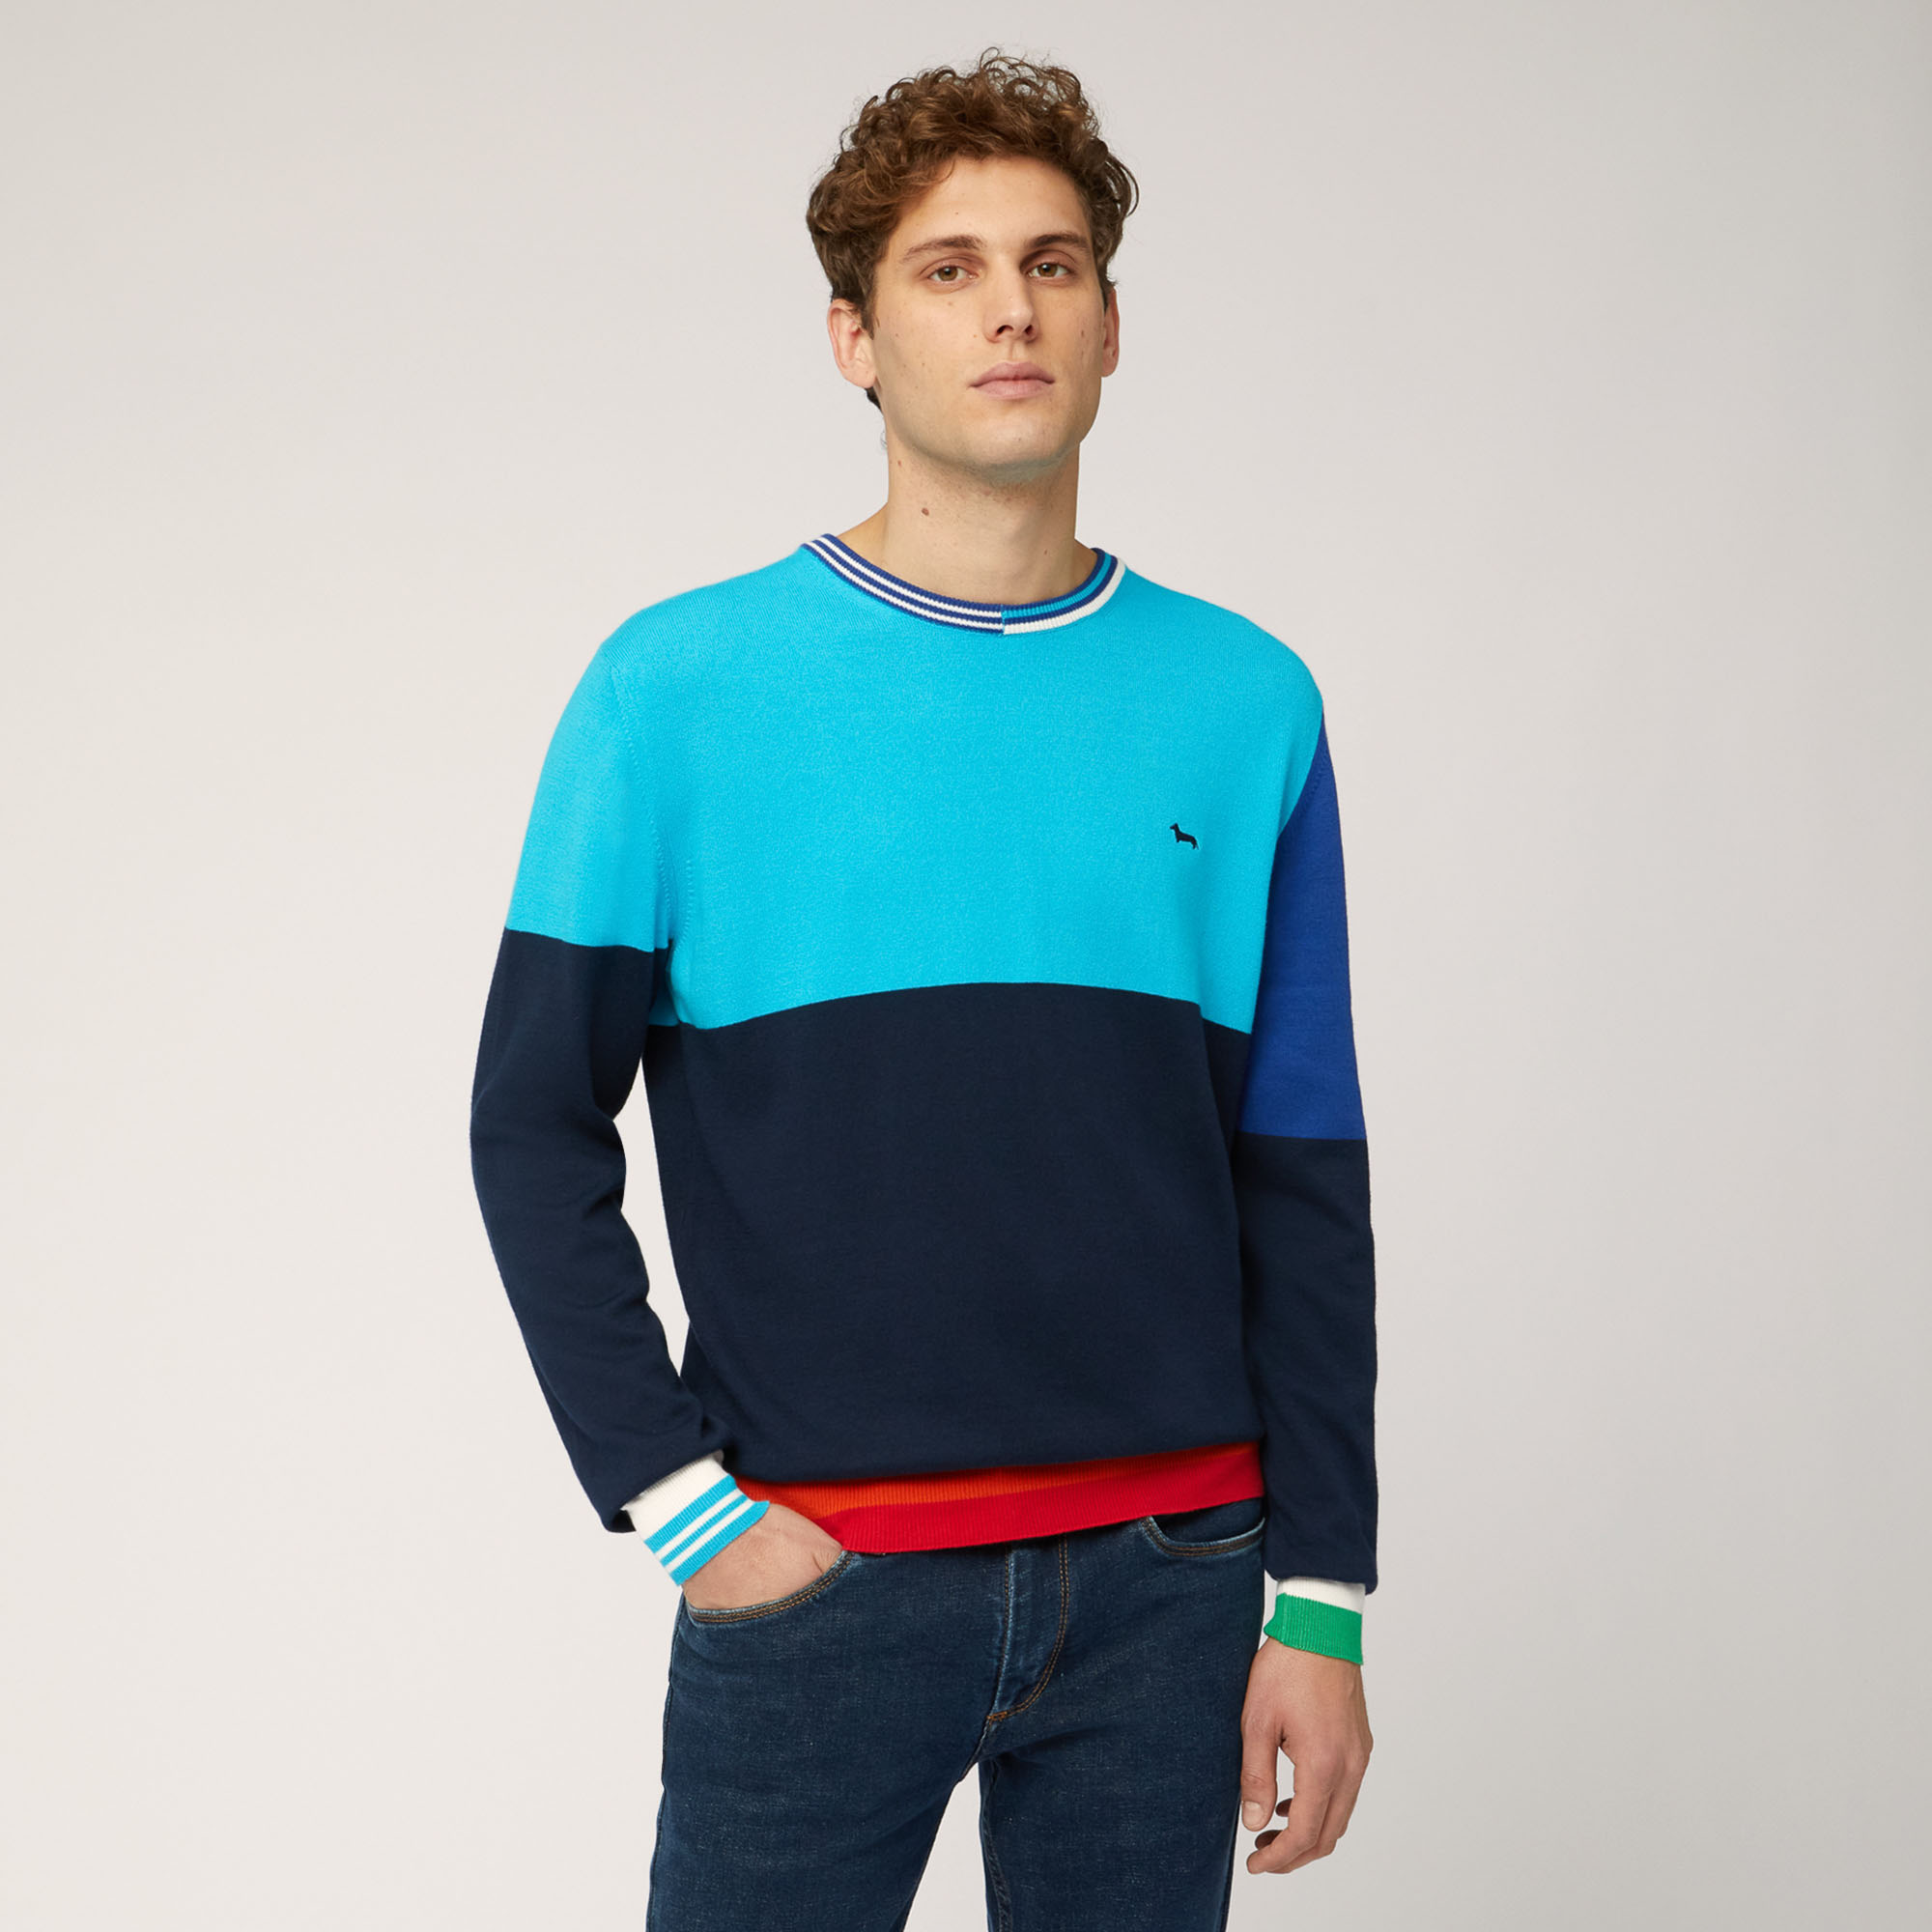 Organic Cotton Crew Neck Pullover with Color Block Design